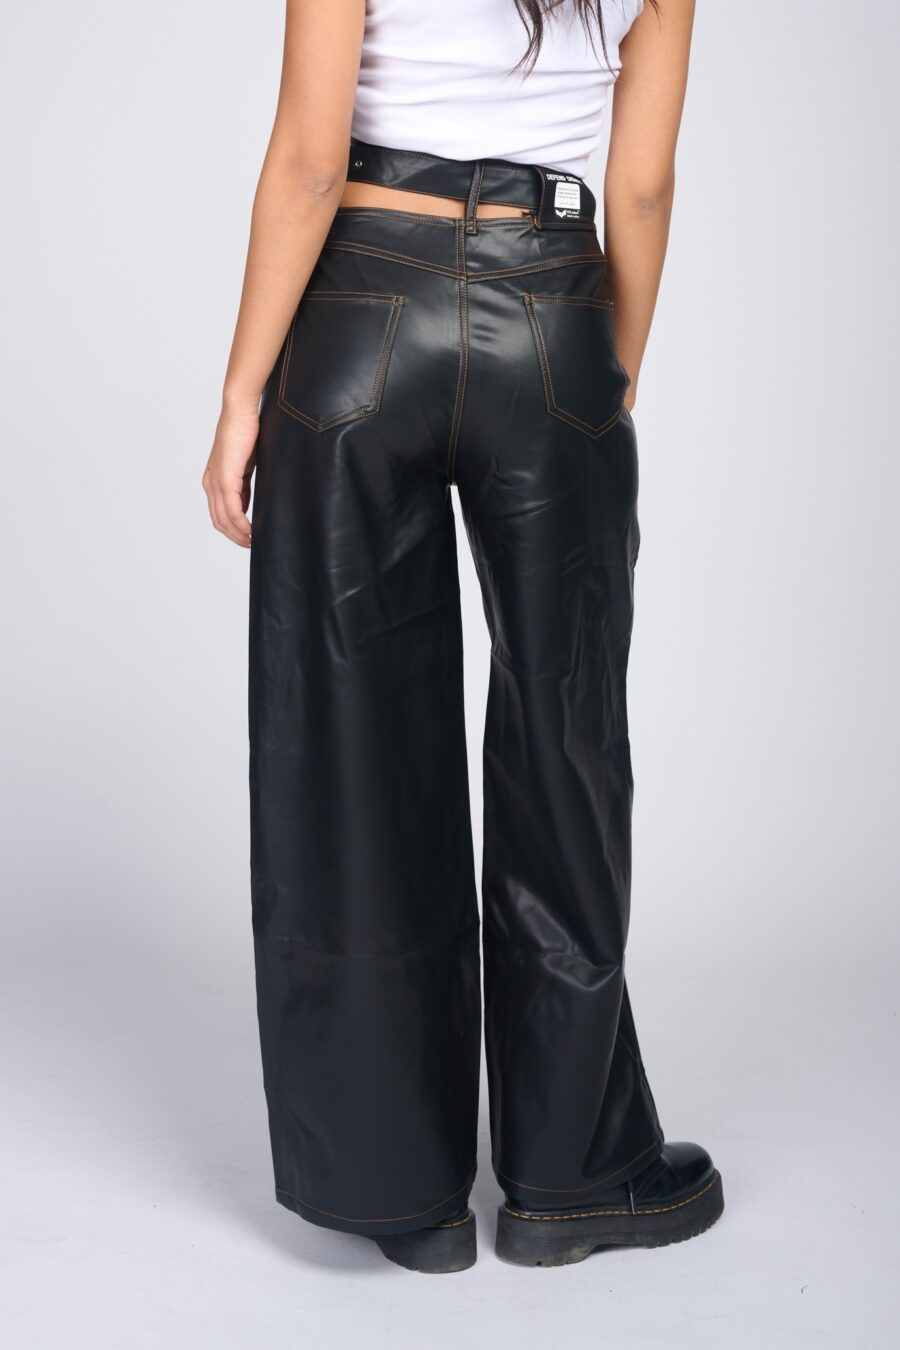 Black wide leg leather pants with suspended belt | Runway Secrets